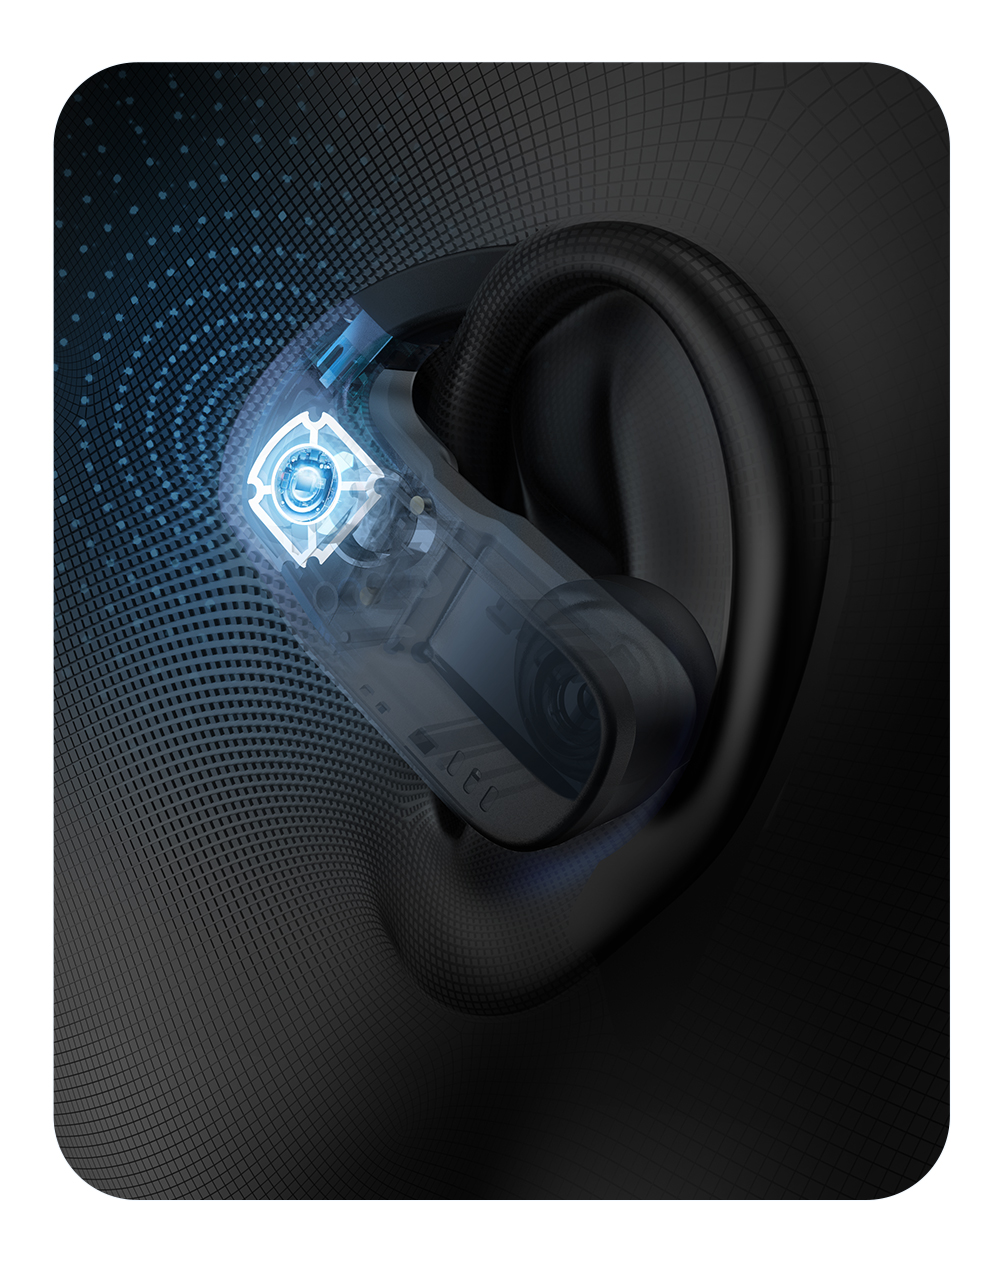 DACOM-Bonebuds-Bone-Conduction-Headphones-TWS-Waterproof-bluetooth-Earbuds-Ture-Wireless-Stereo-Spor-1833114-2